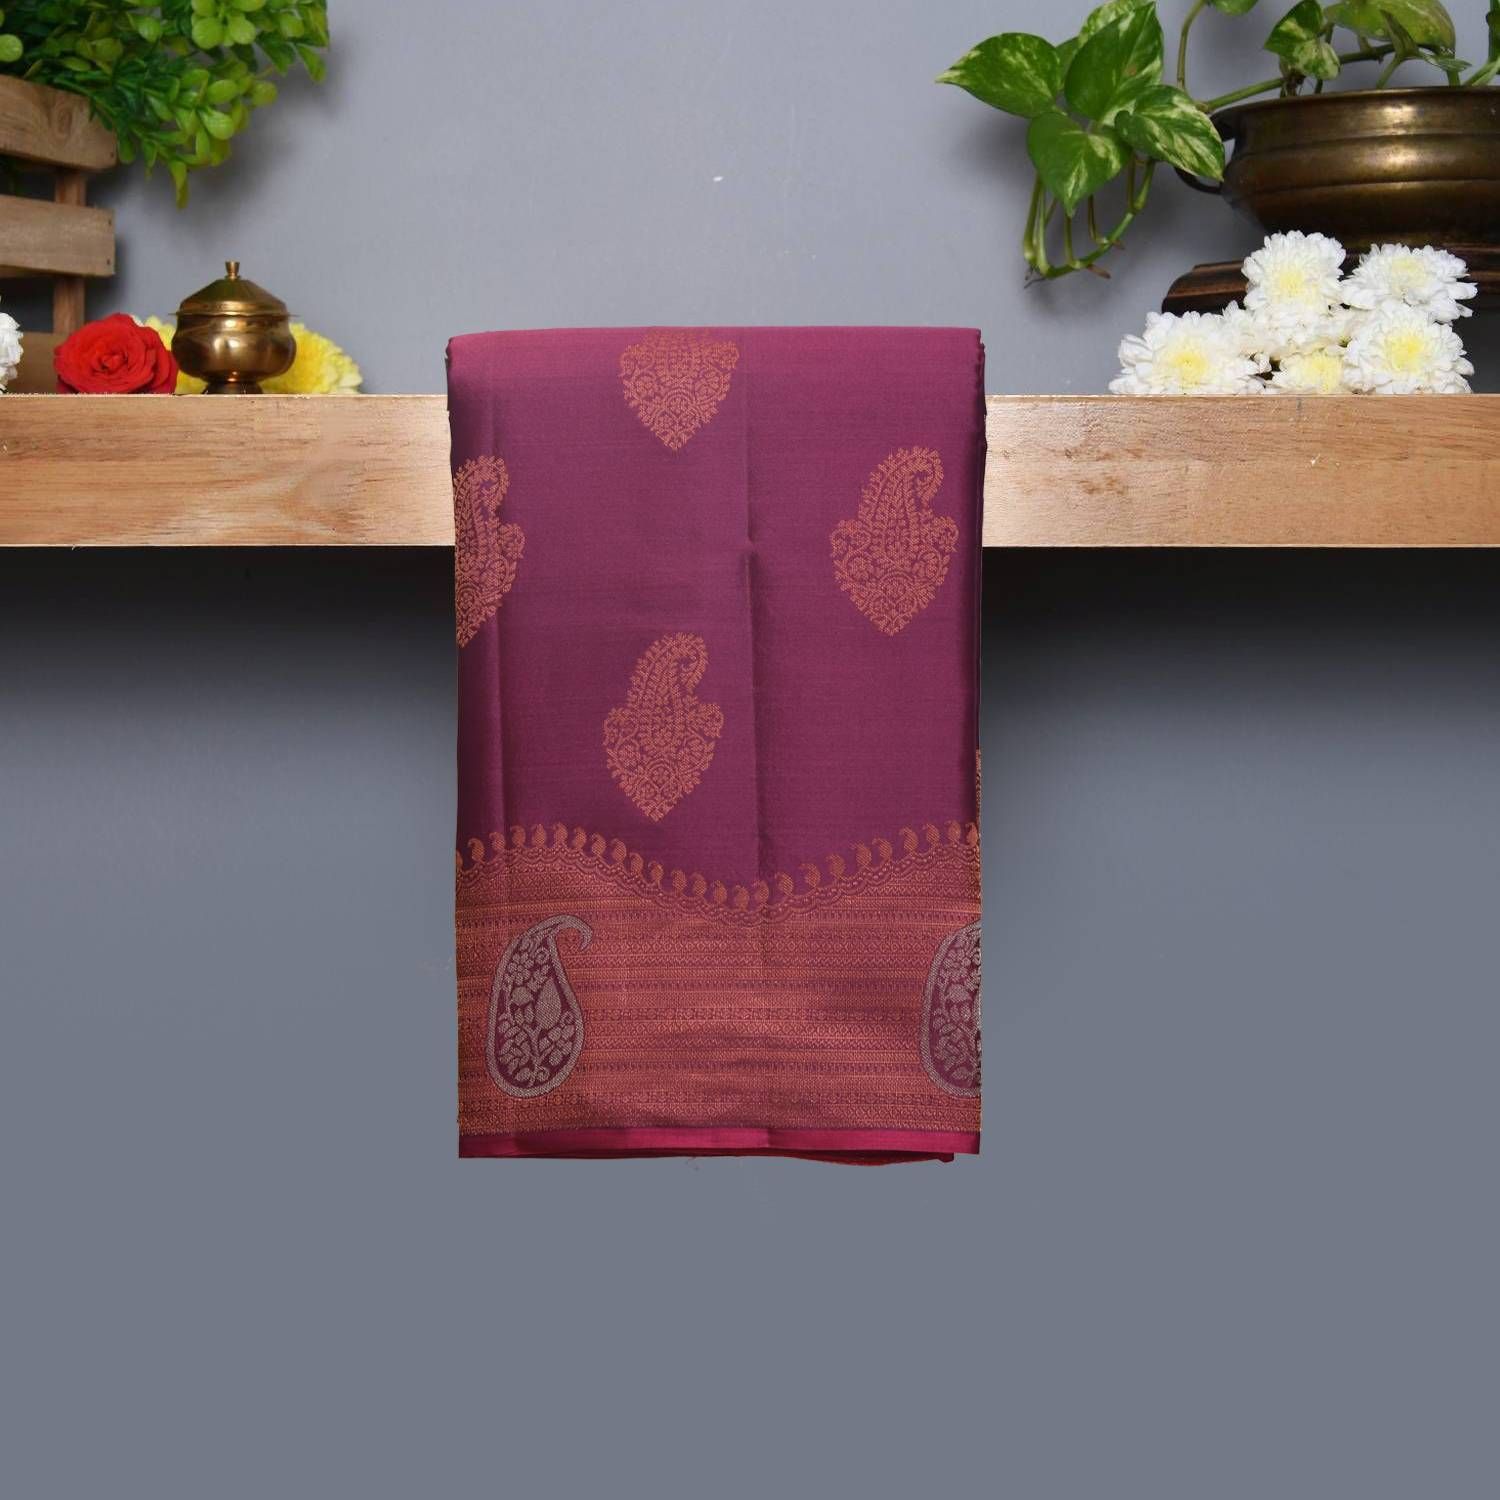 Thanmayi Soft Banarasi Handloom Ikkat Weaving Soft Silk Saree.... at Rs 900  | Sarees in Surat | ID: 2851602977955